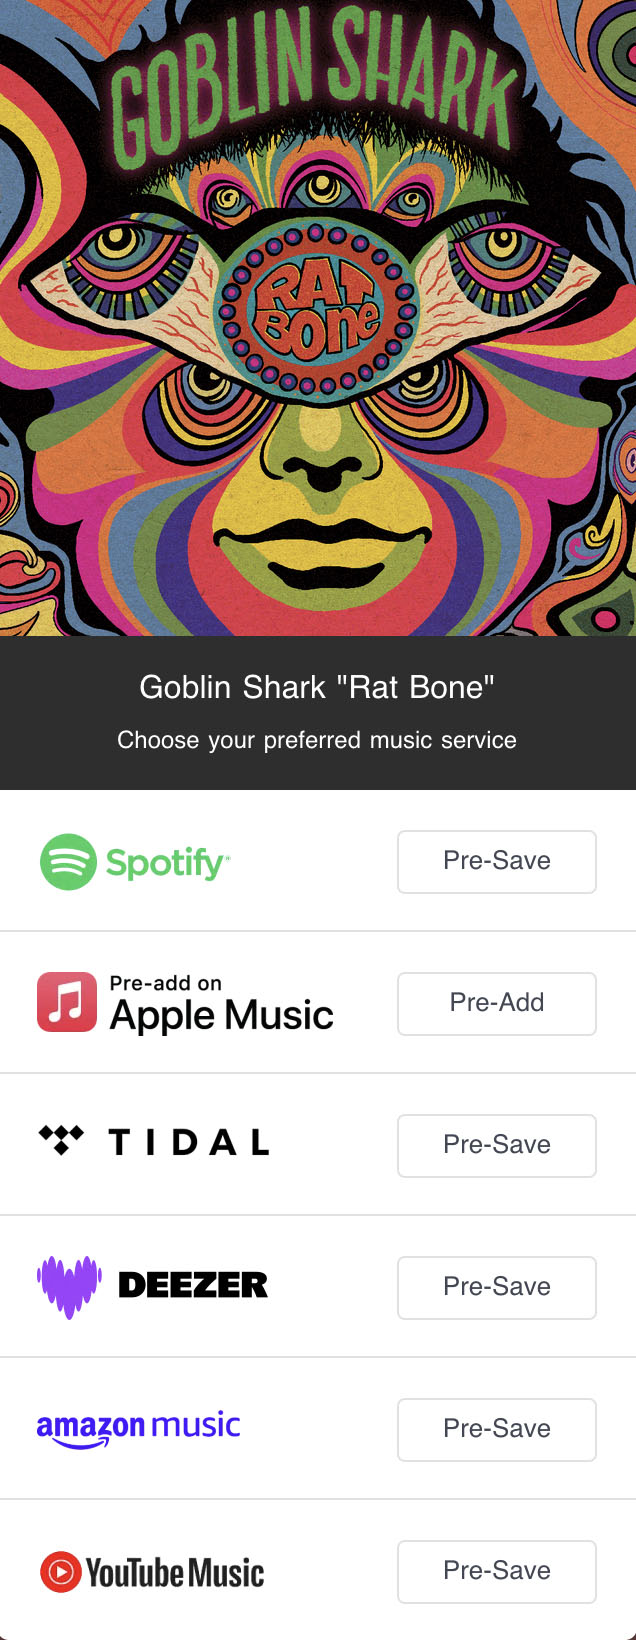 GOBLIN SHARK ALBUM